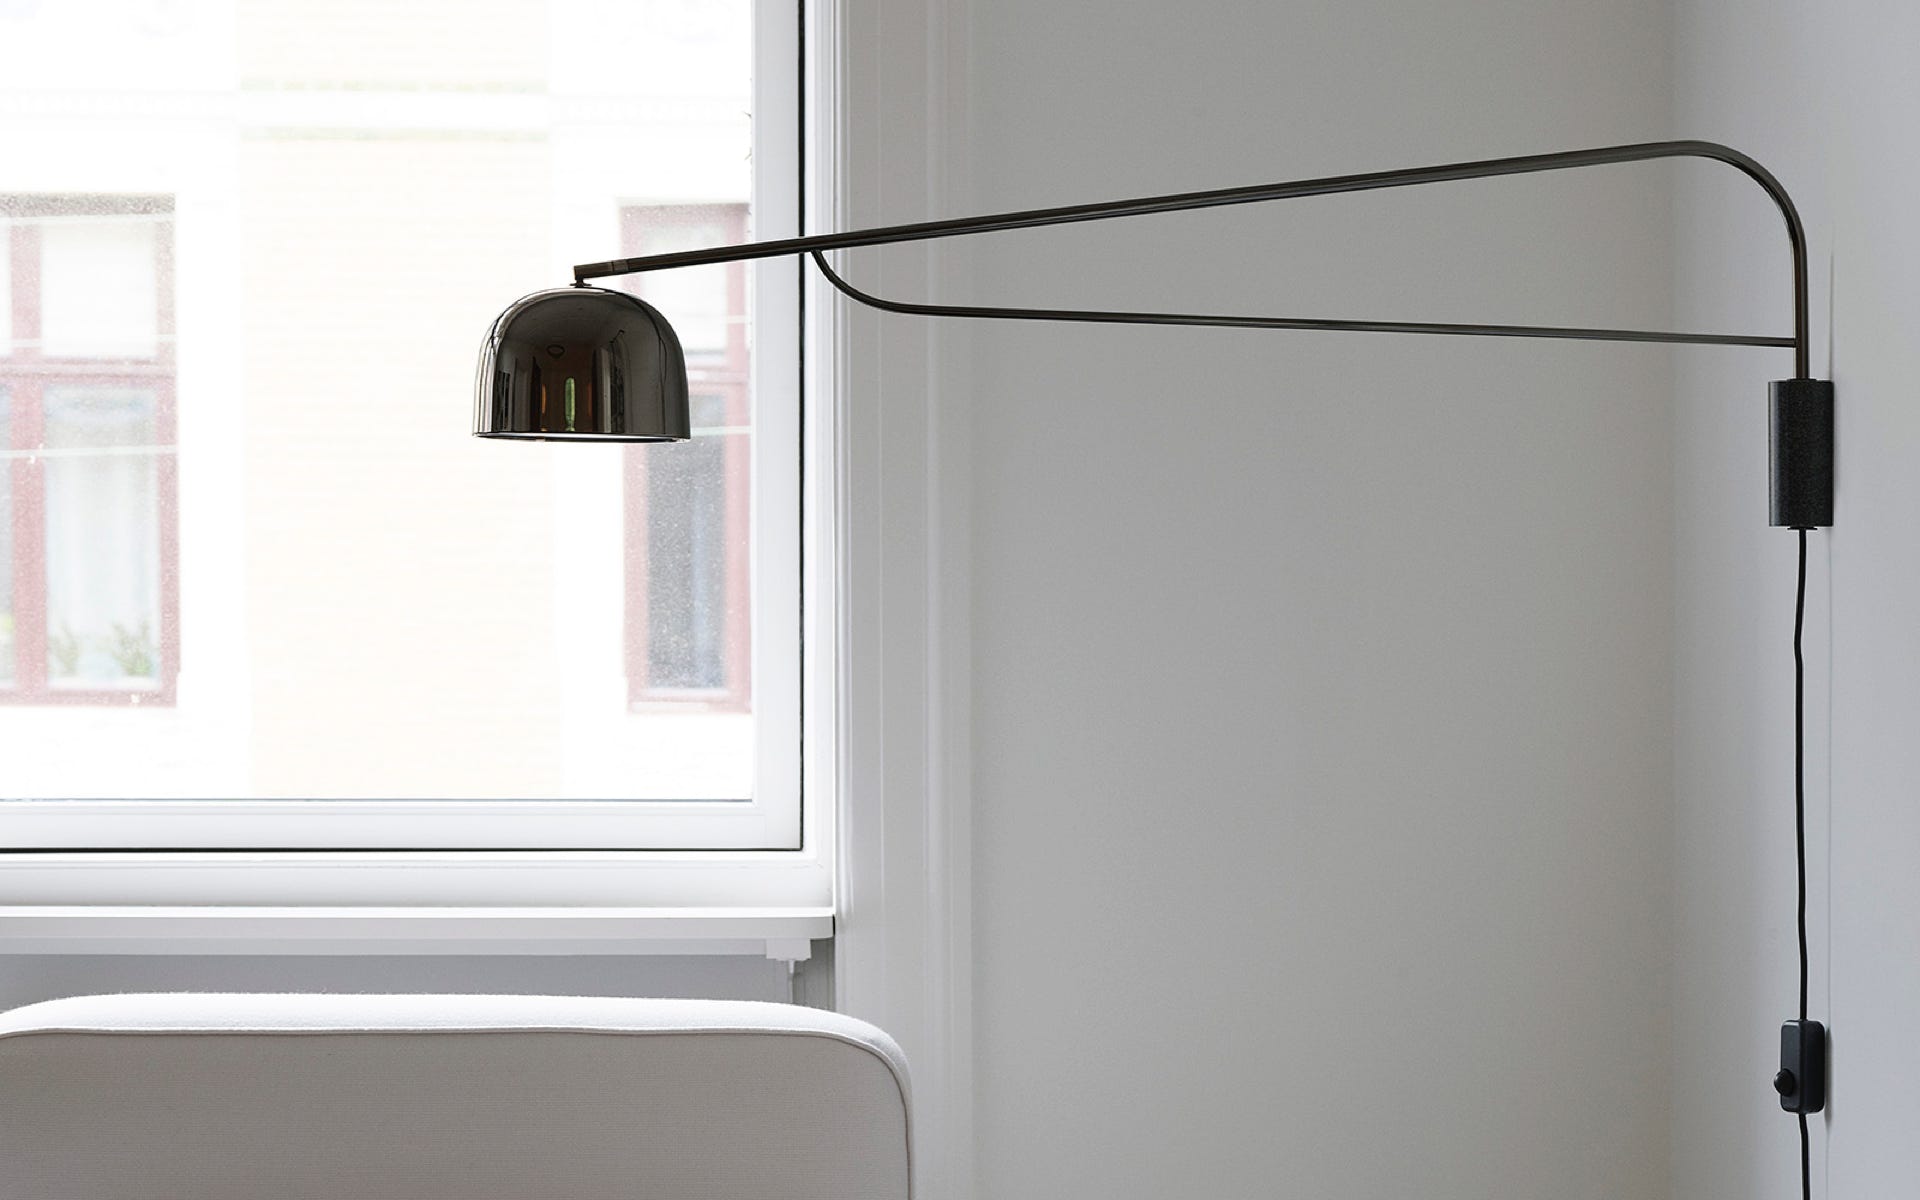 GRANT table lamp, pendant, wall lamp Simon Legald, 2014